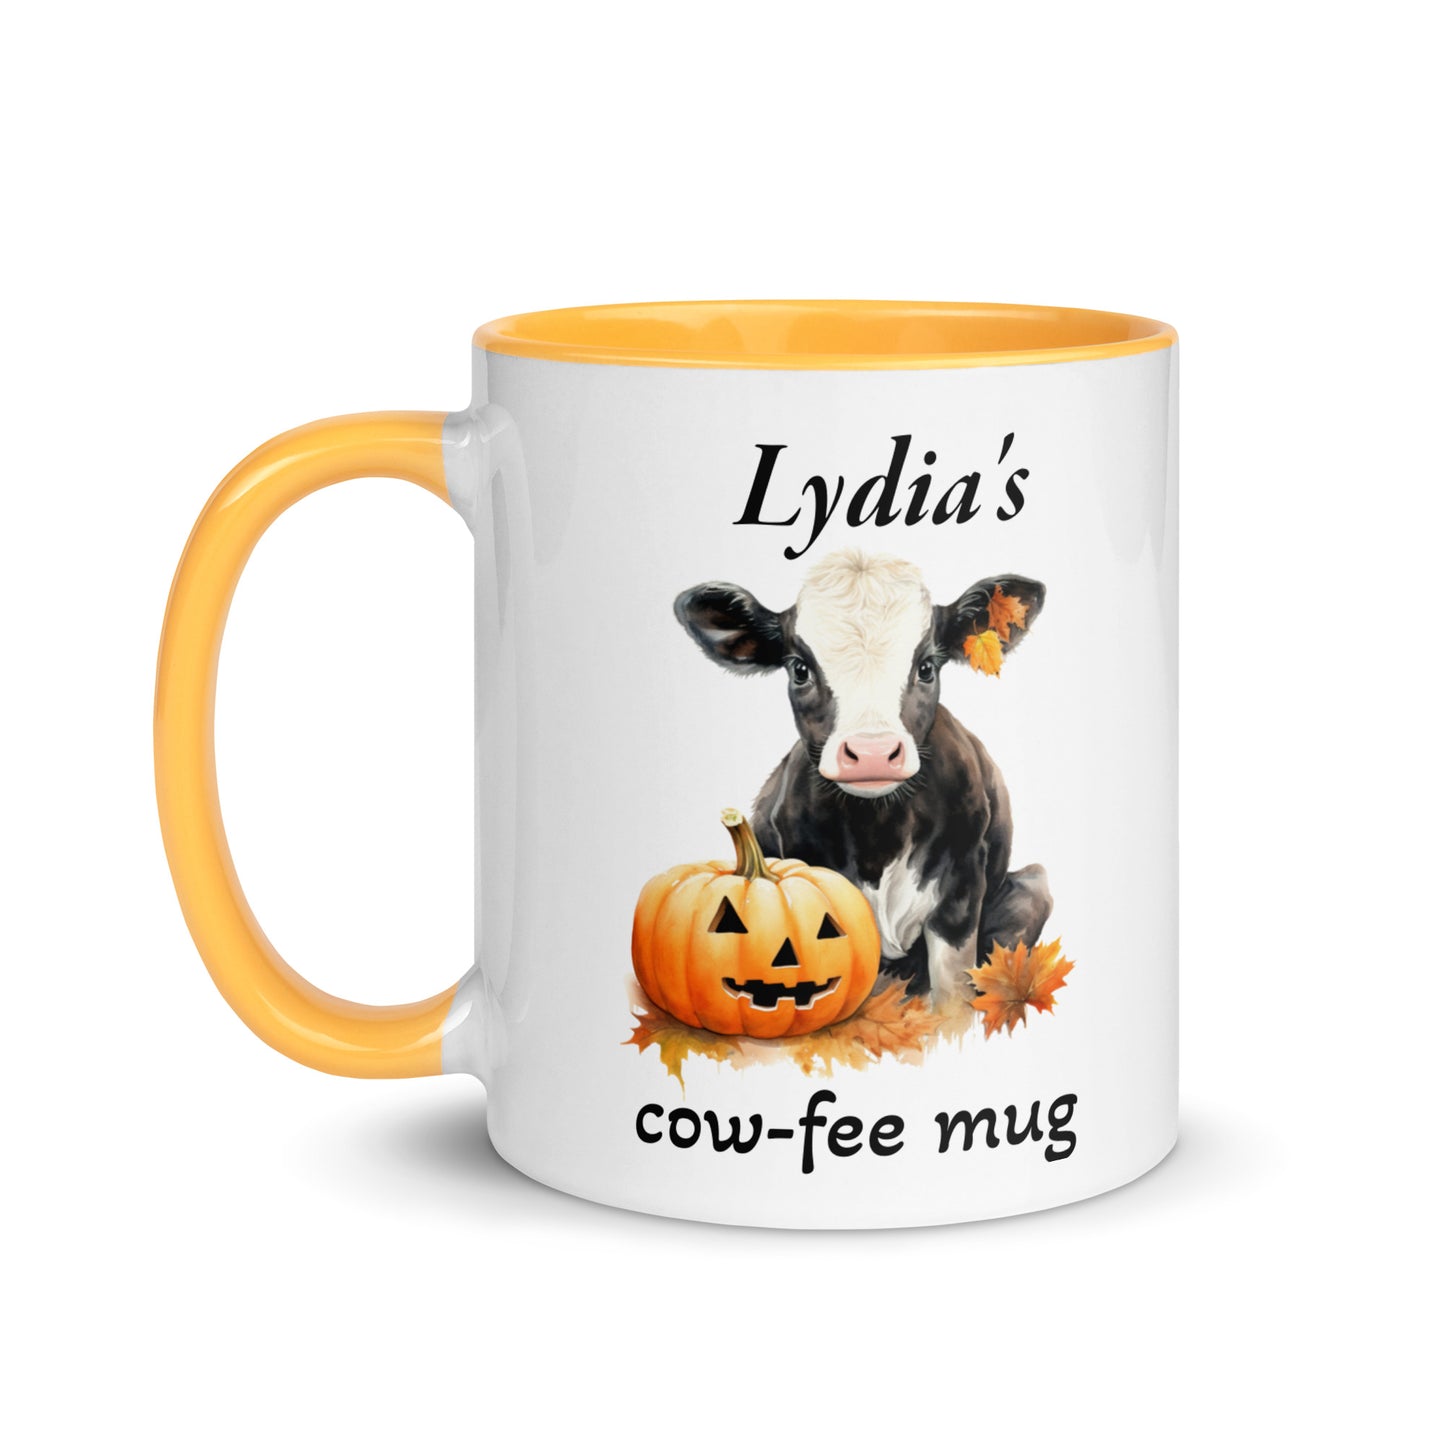 Personalized Cow-fee Mug